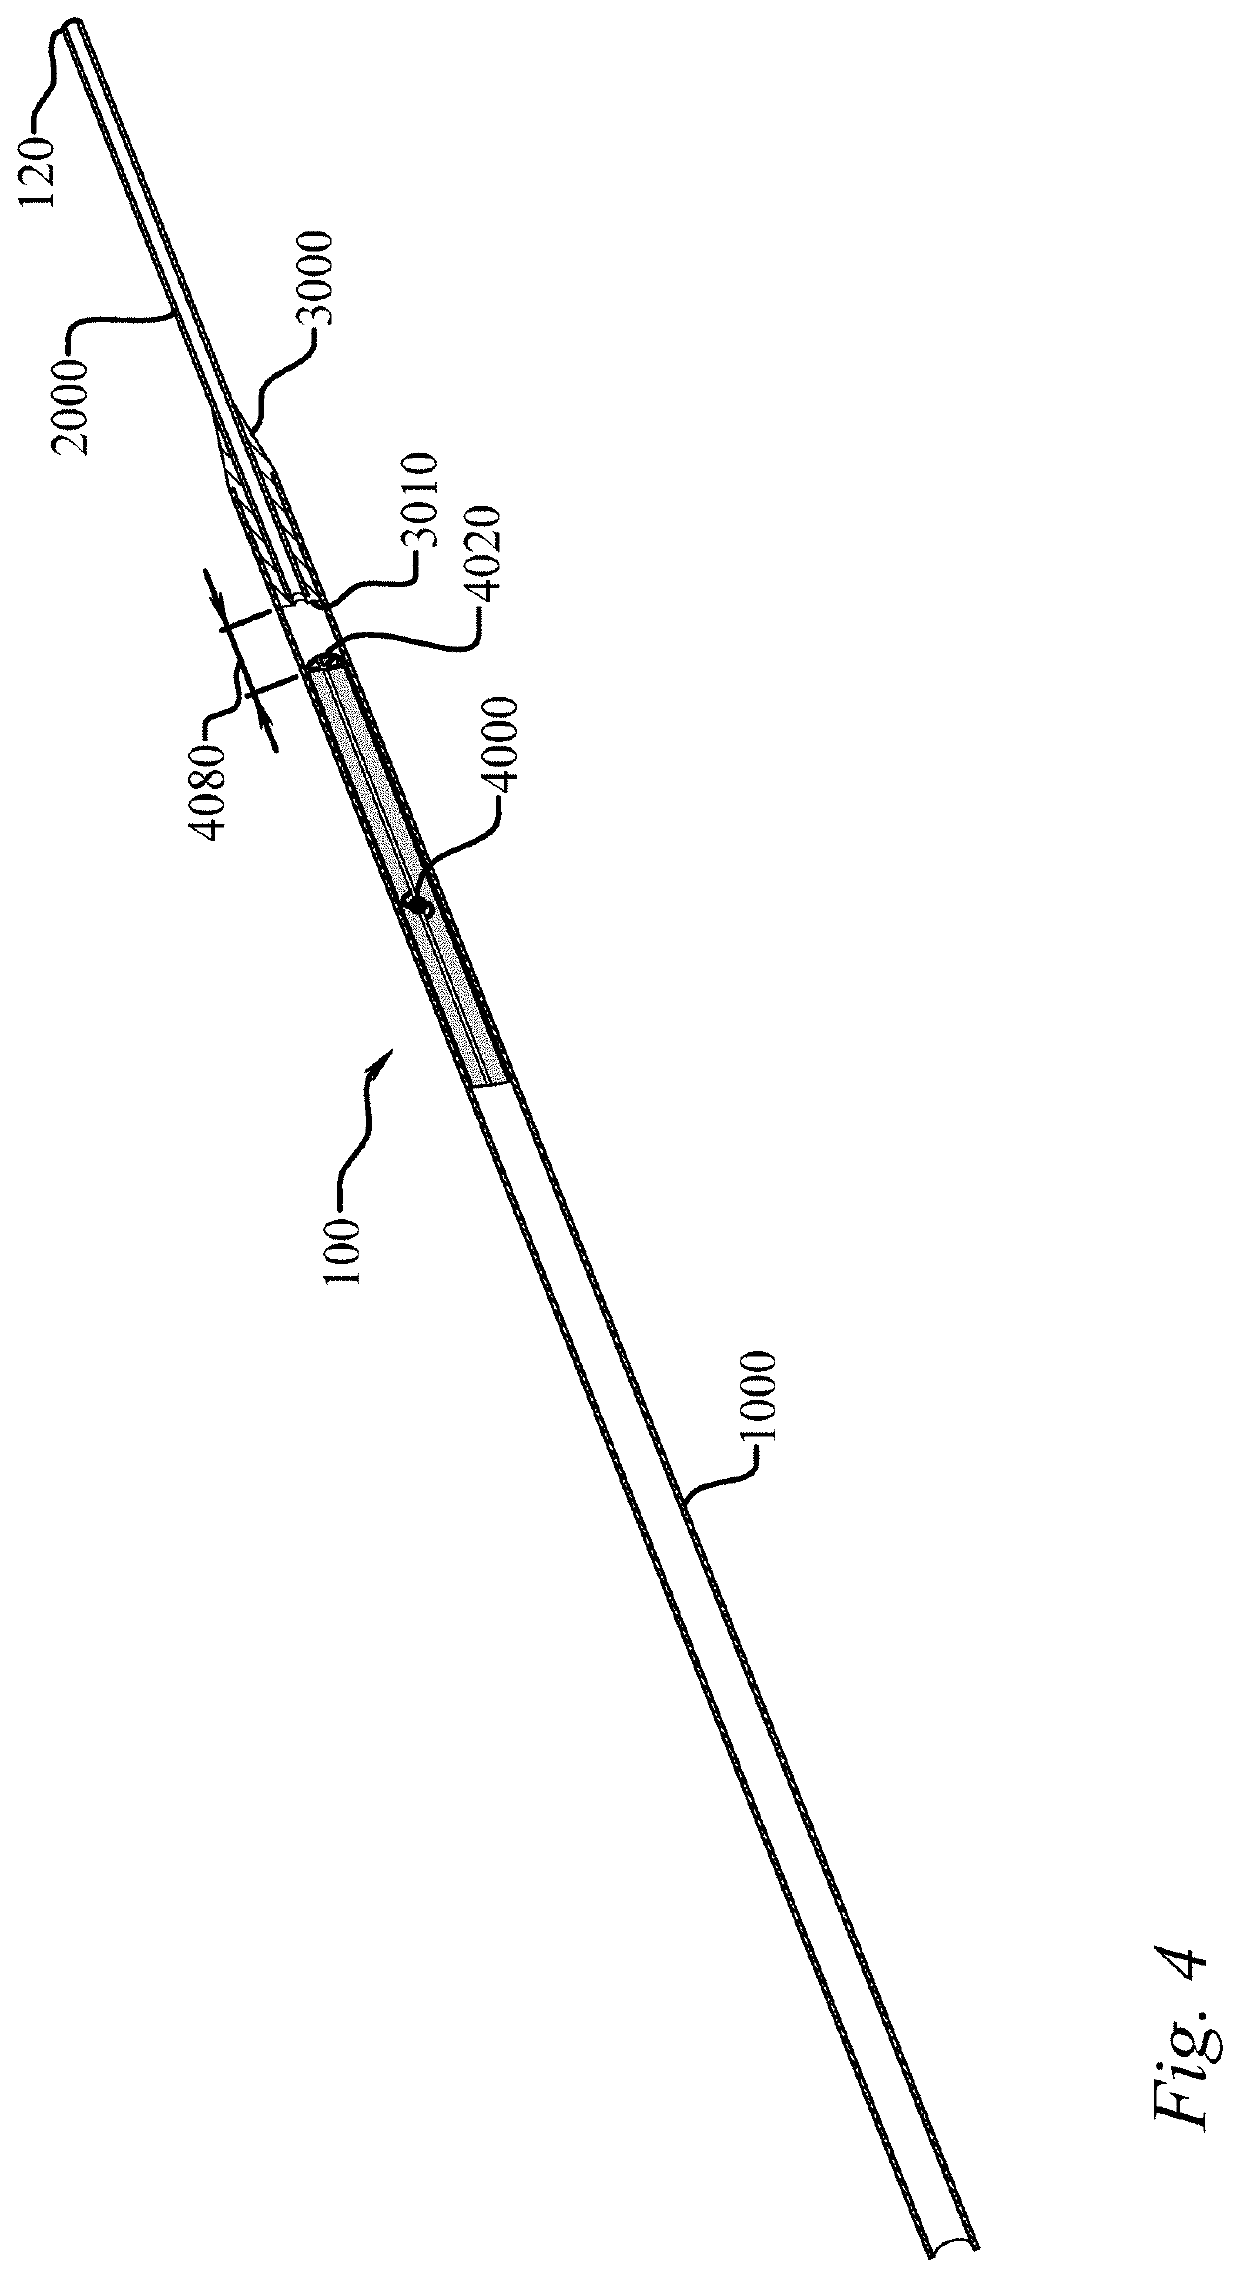 Golf shaft system and golf shaft